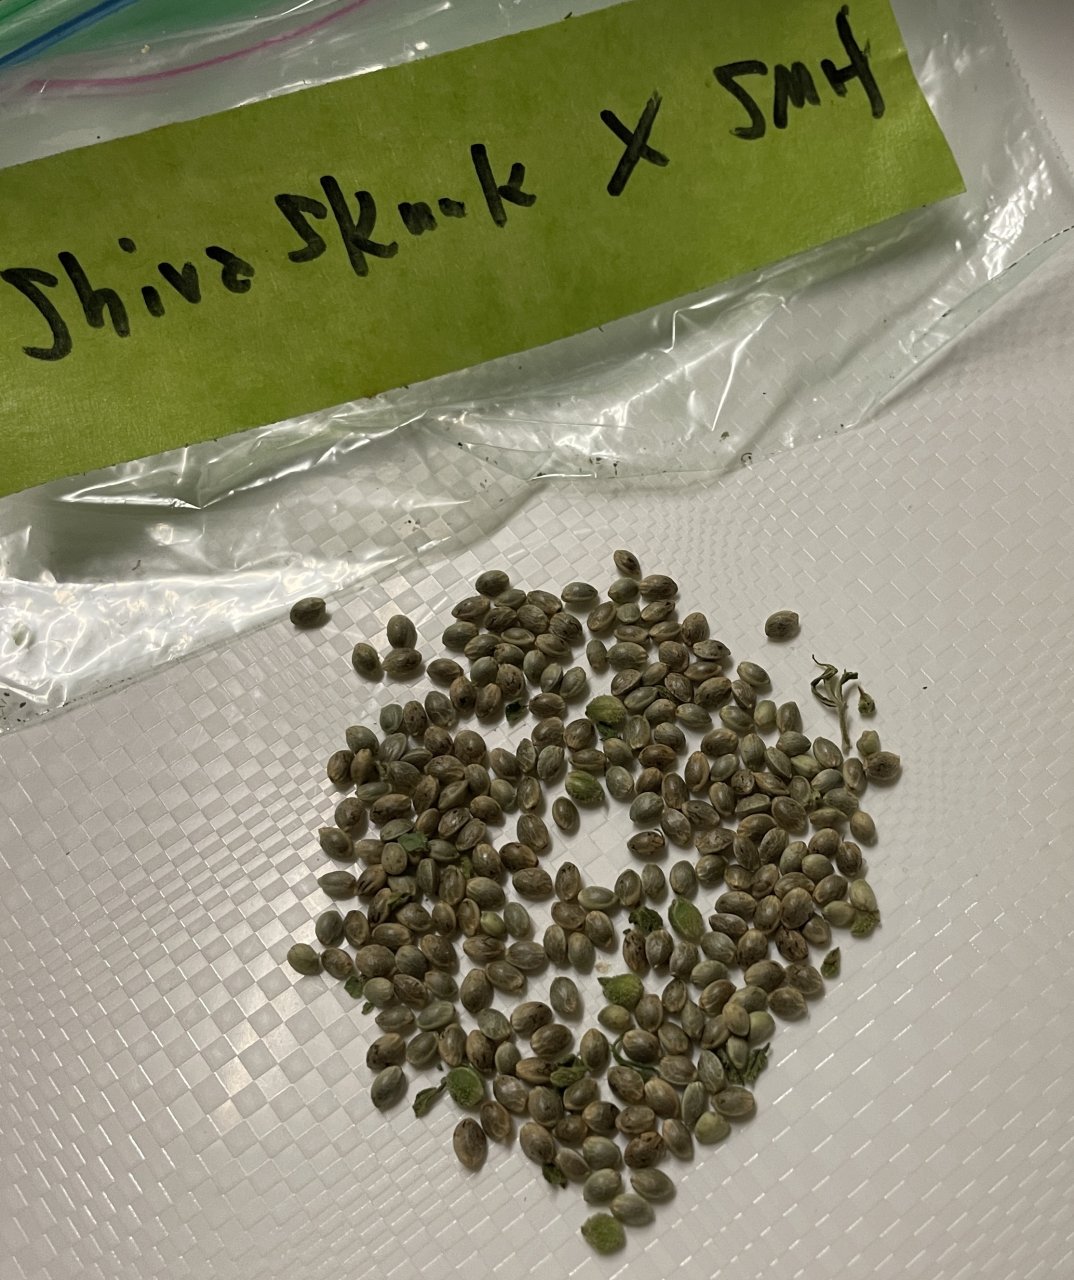 Shiva Skunk x SMH air-pollinated seeds.jpg